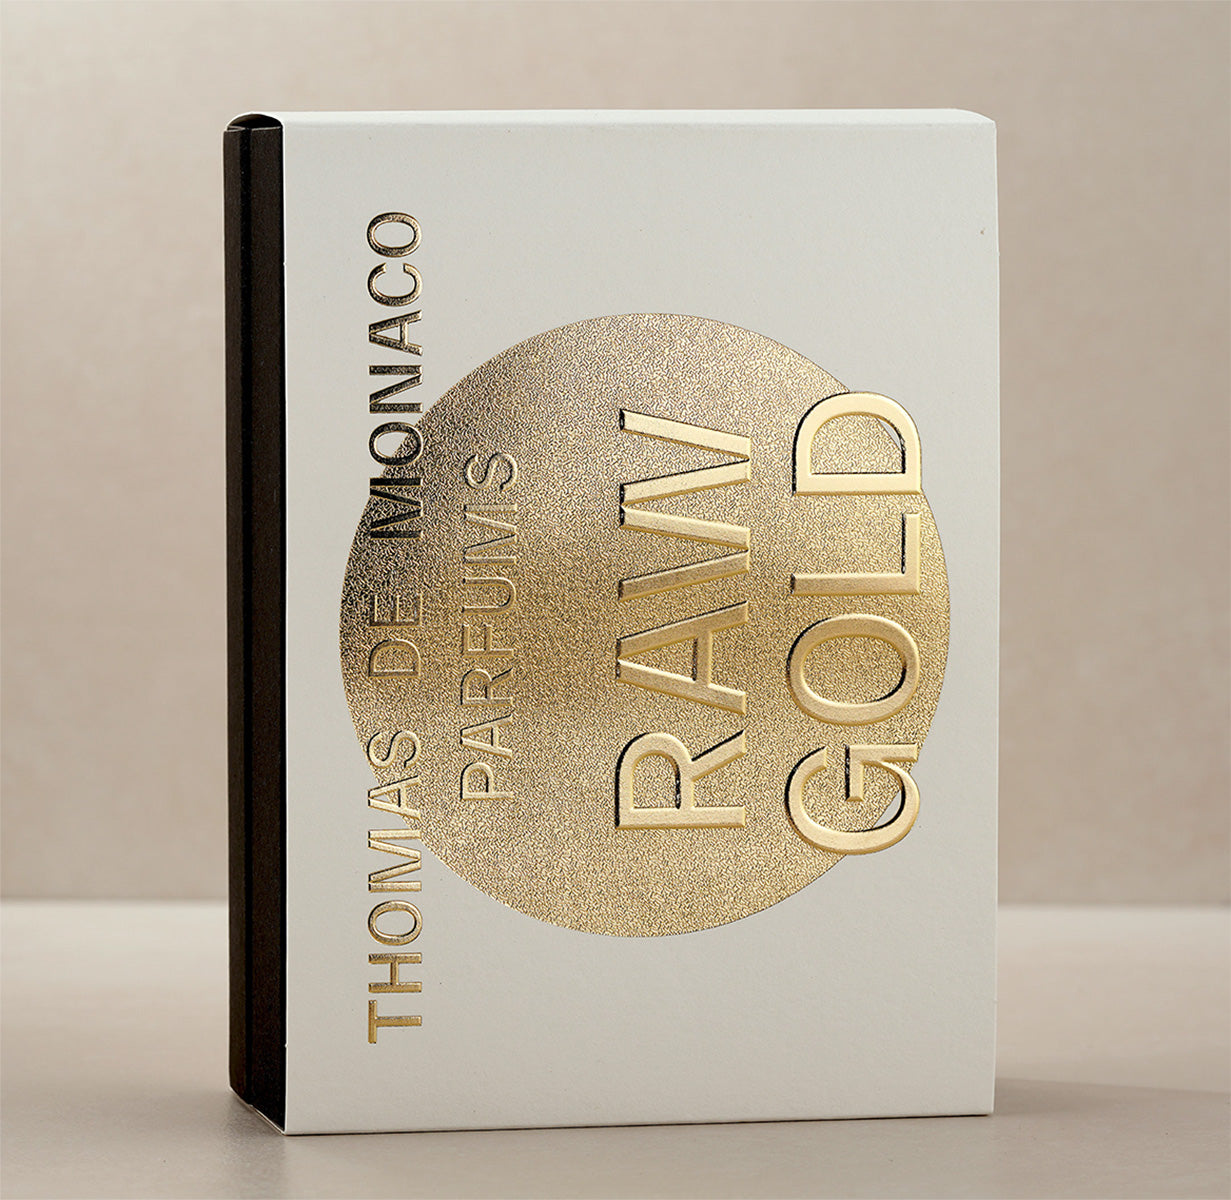 Raw Gold by Thomas De Monaco at Indigo